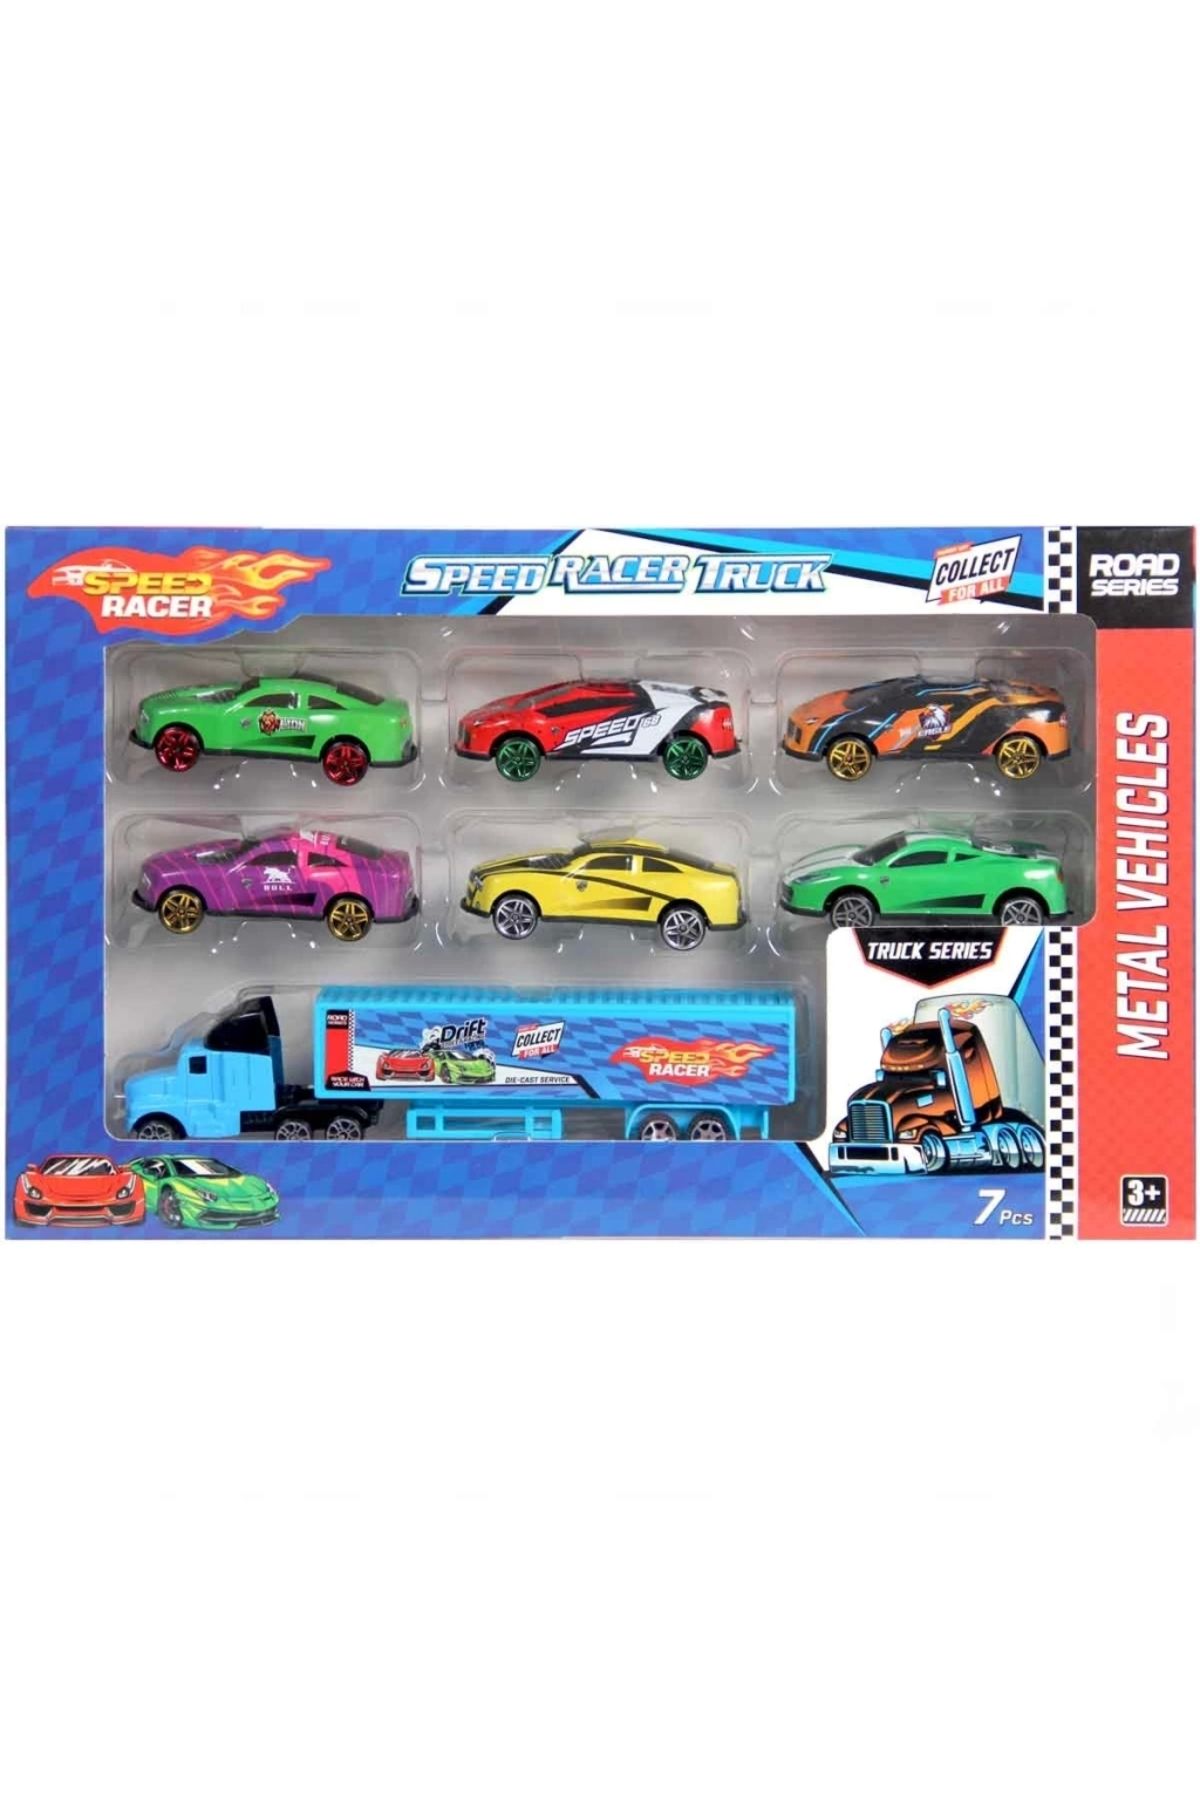 Toysan Speed Racer Road Series Truck Metal Model Araba Seti toy-46